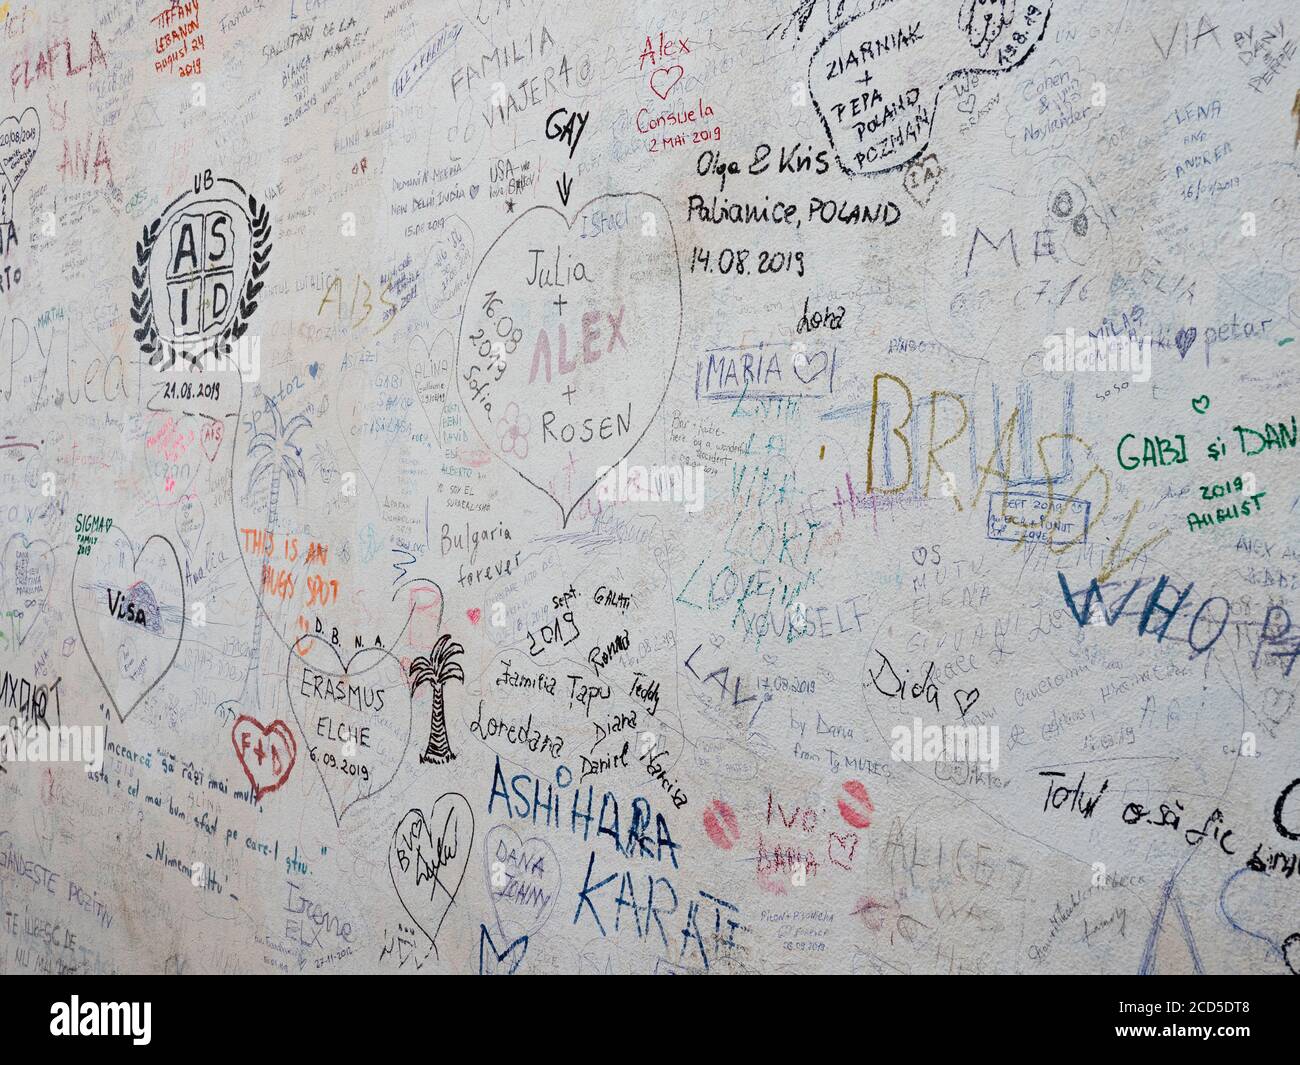 Messages left on wall of Strada Sforii, Brasov, Transylvania, Romania Stock Photo